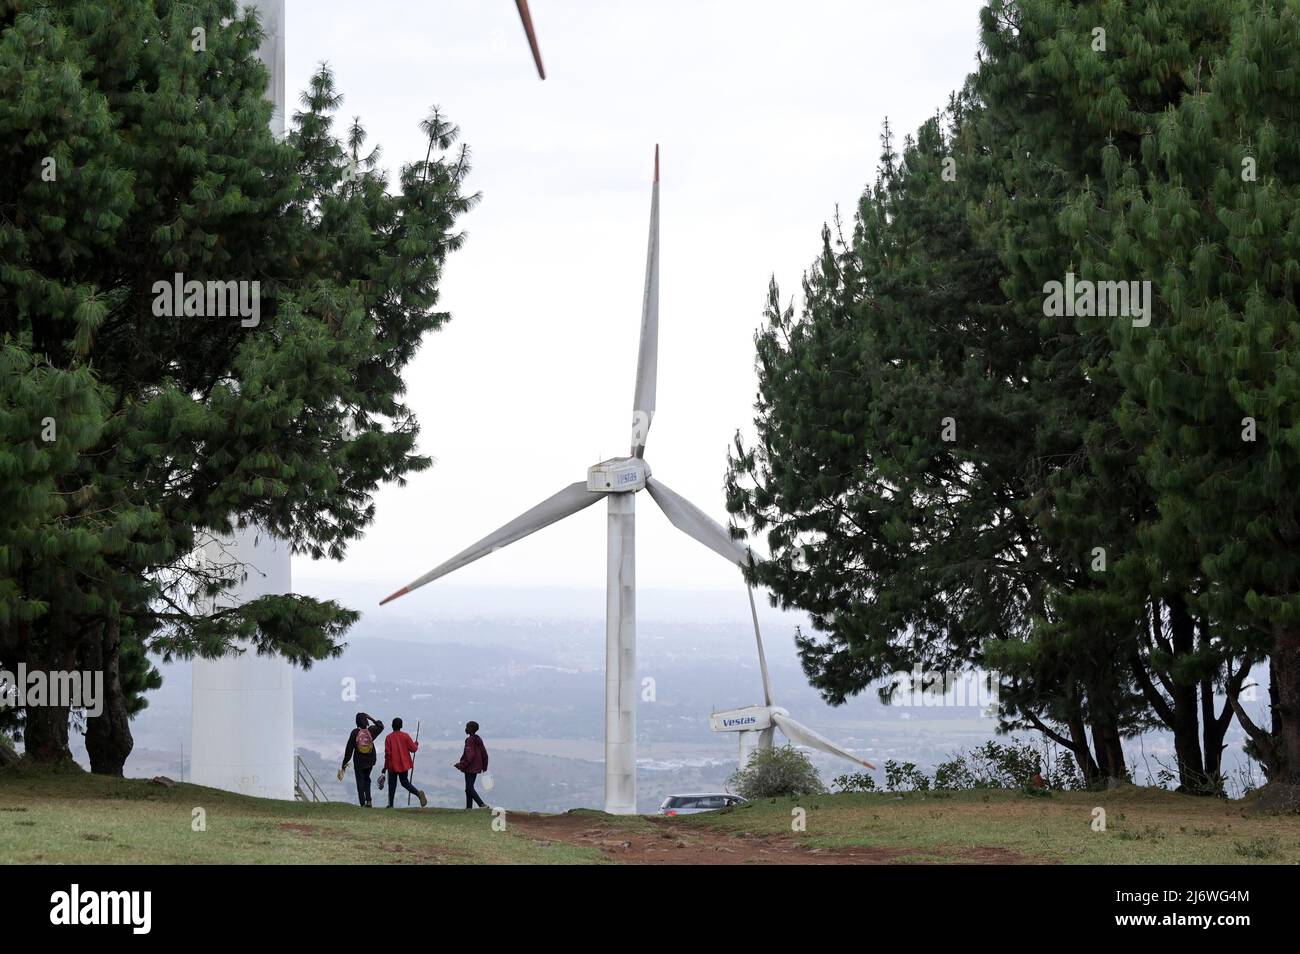 KENYA, Nairobi, Ngong Hills, Vestas Wind Turbines Windfarm/ KENIA, Nairobi, Ngong Hills, Windpark mit Vestas Windkraftanlagen Foto Stock